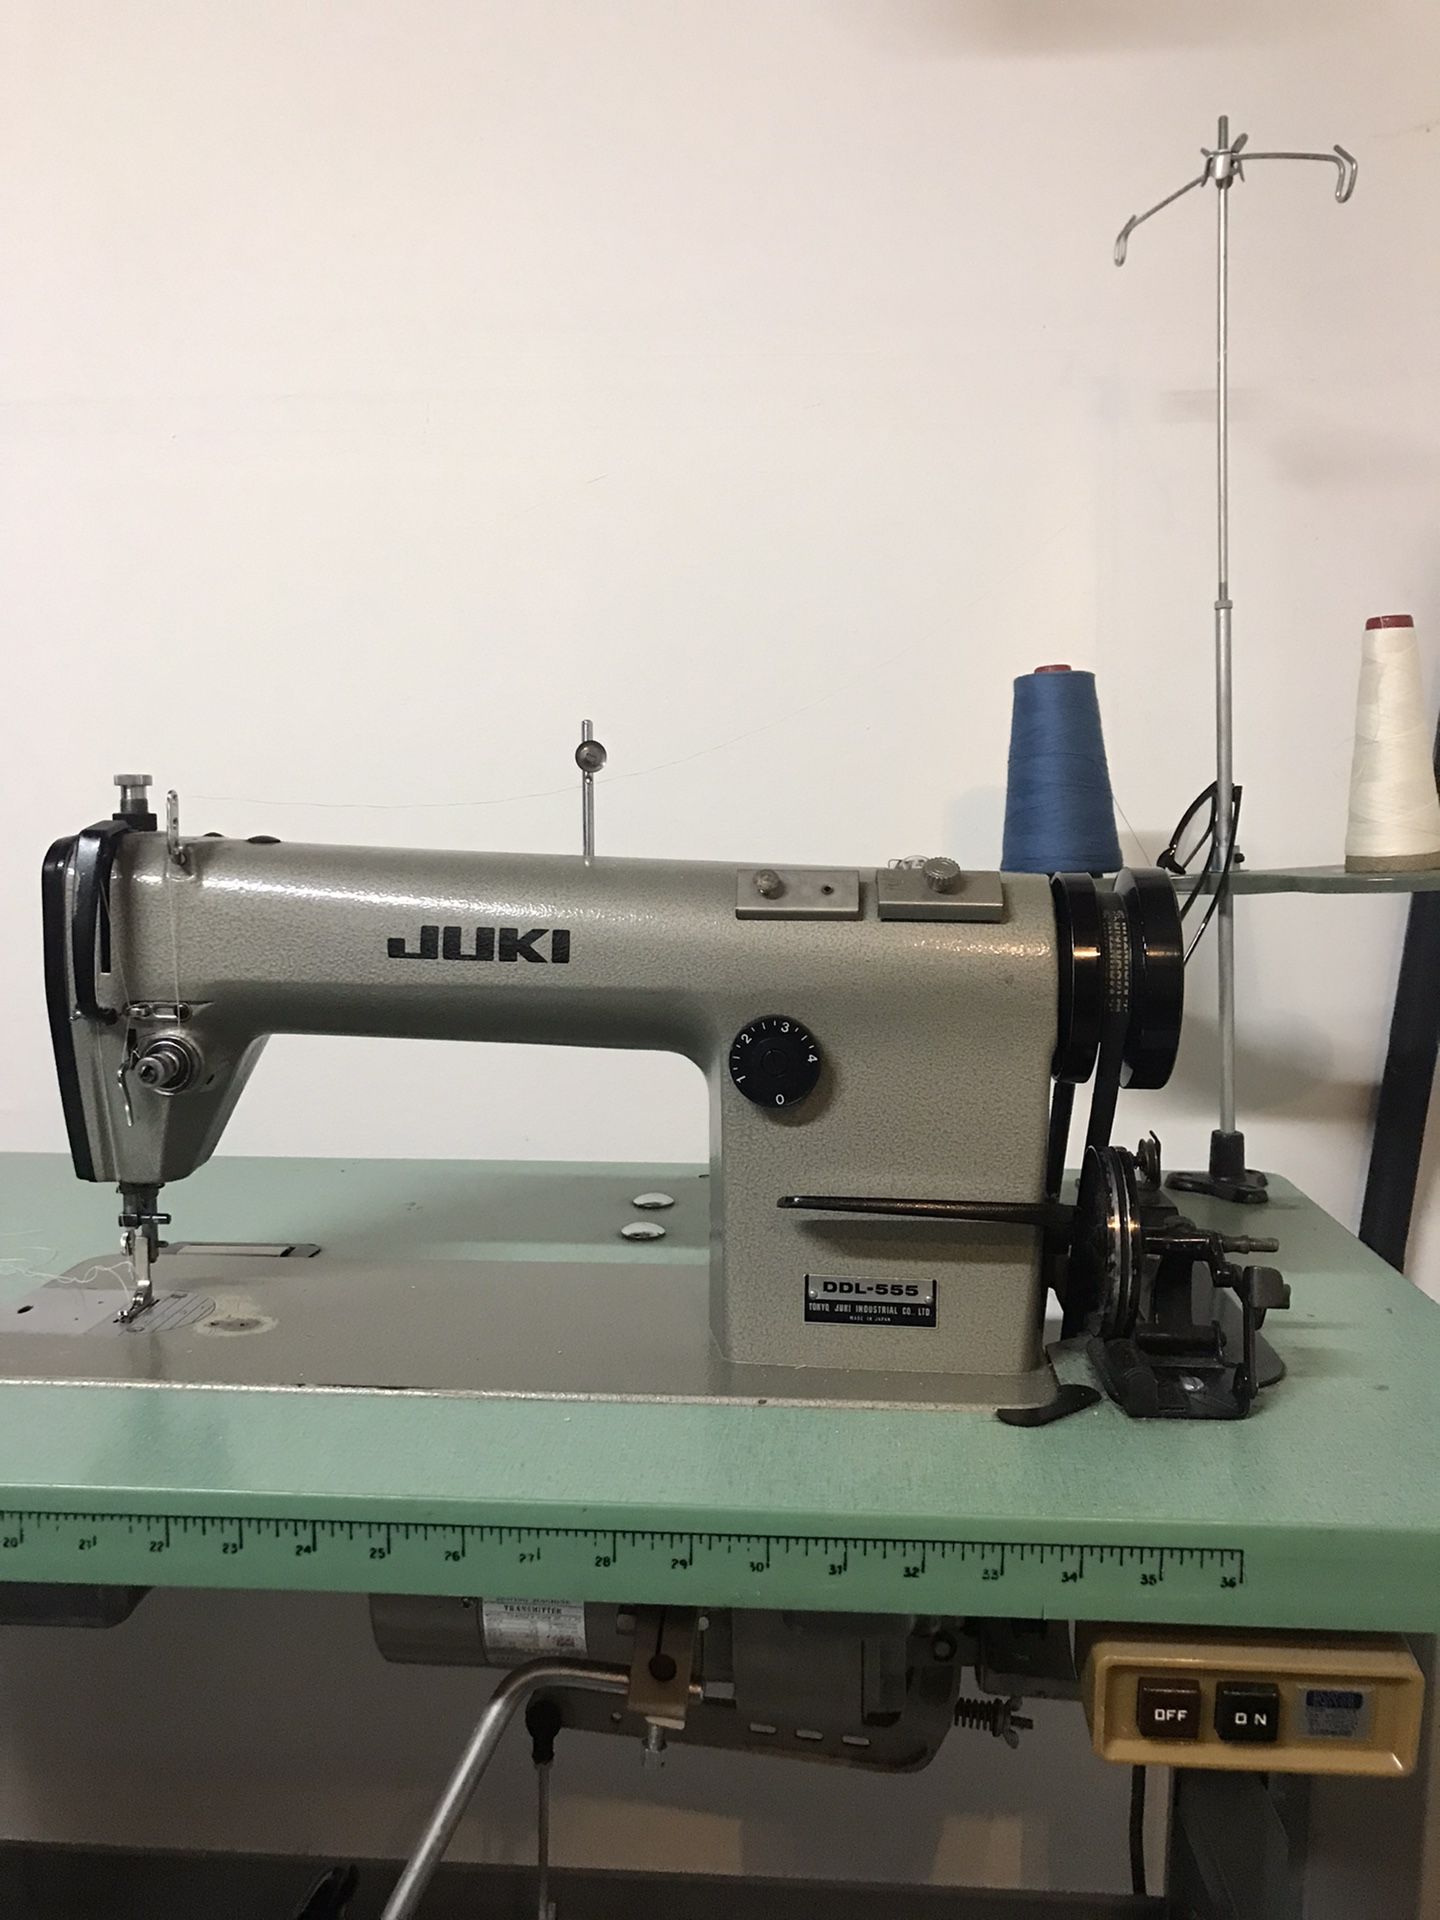 Juki Industrial sewing machine